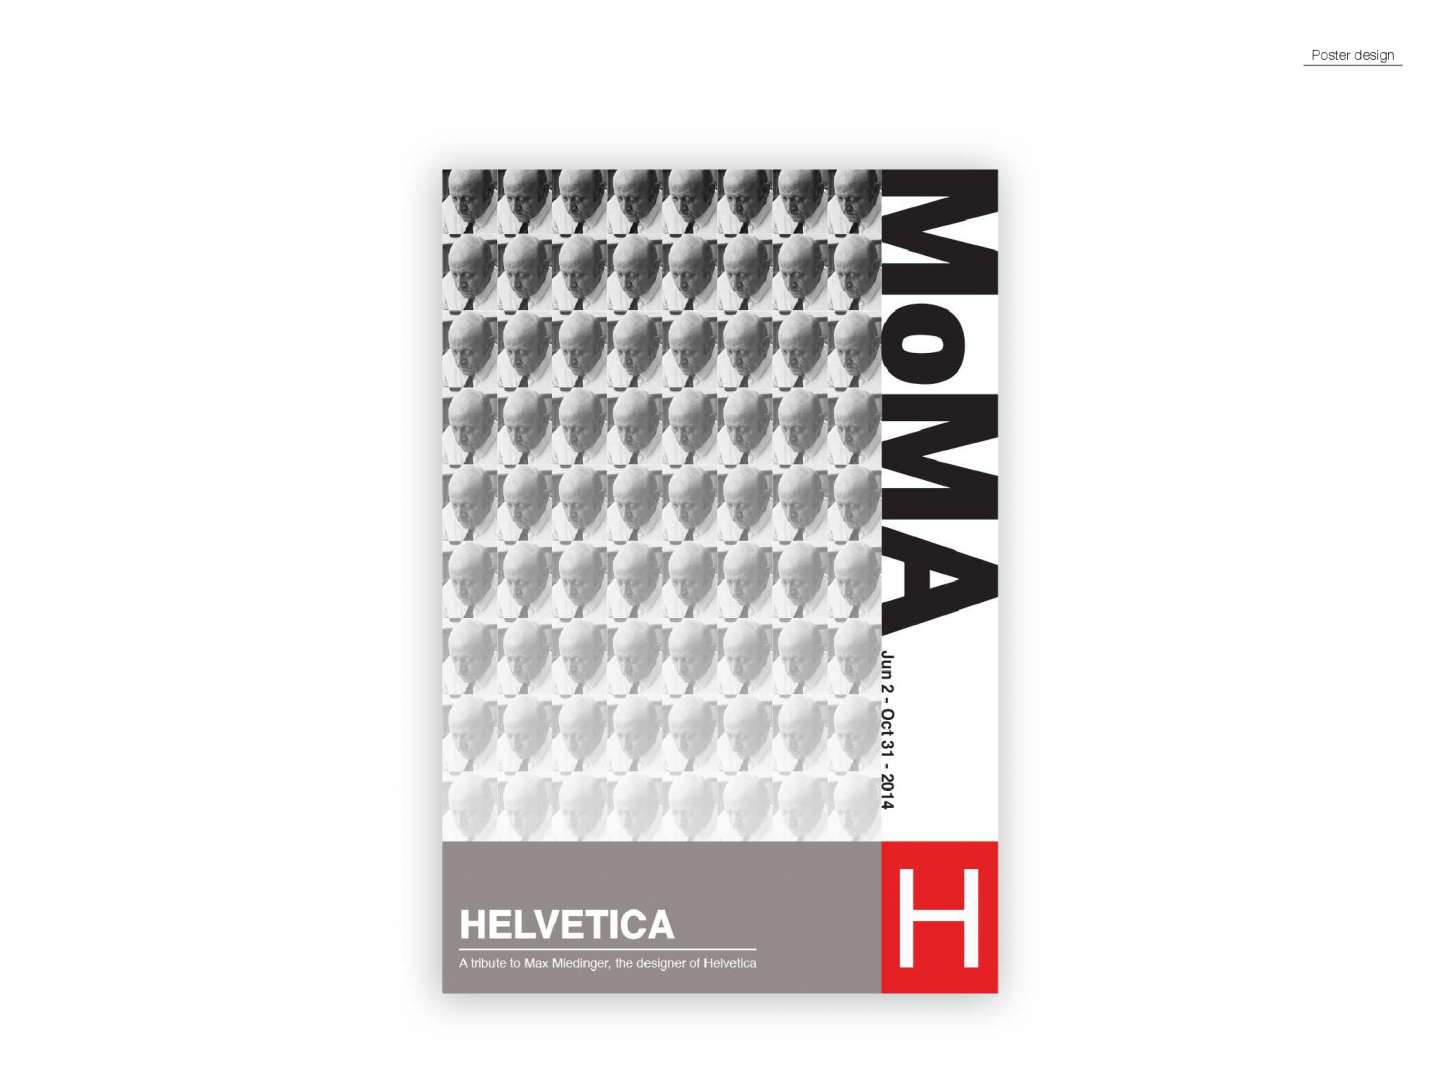 Helvetica project